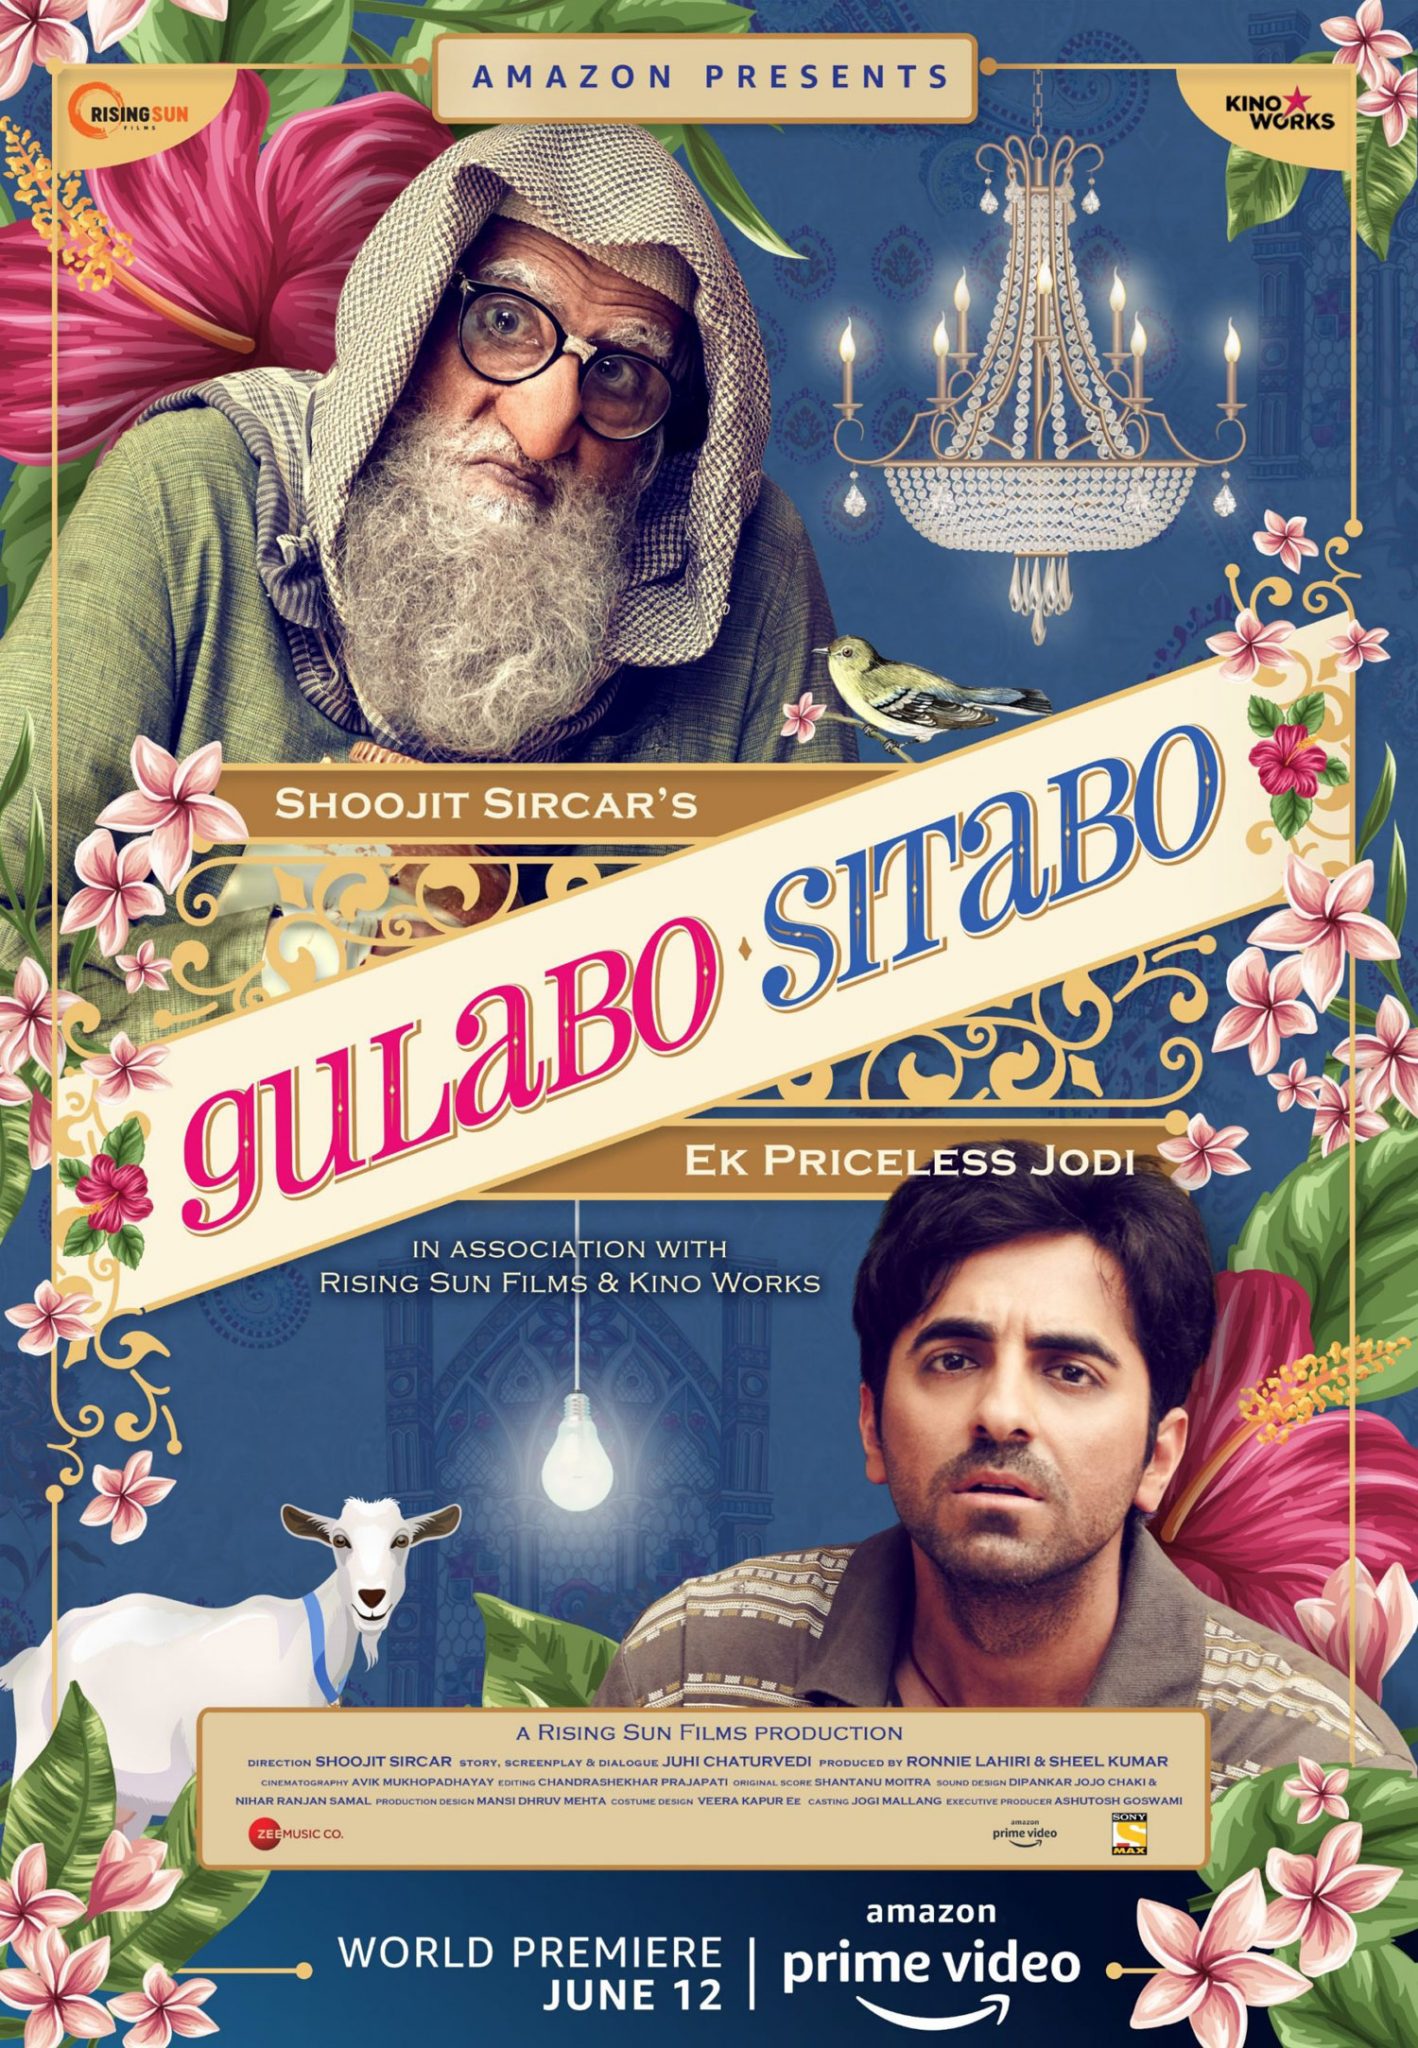 Gulabo Sitabo Streaming Online Amazon Prime Video 1